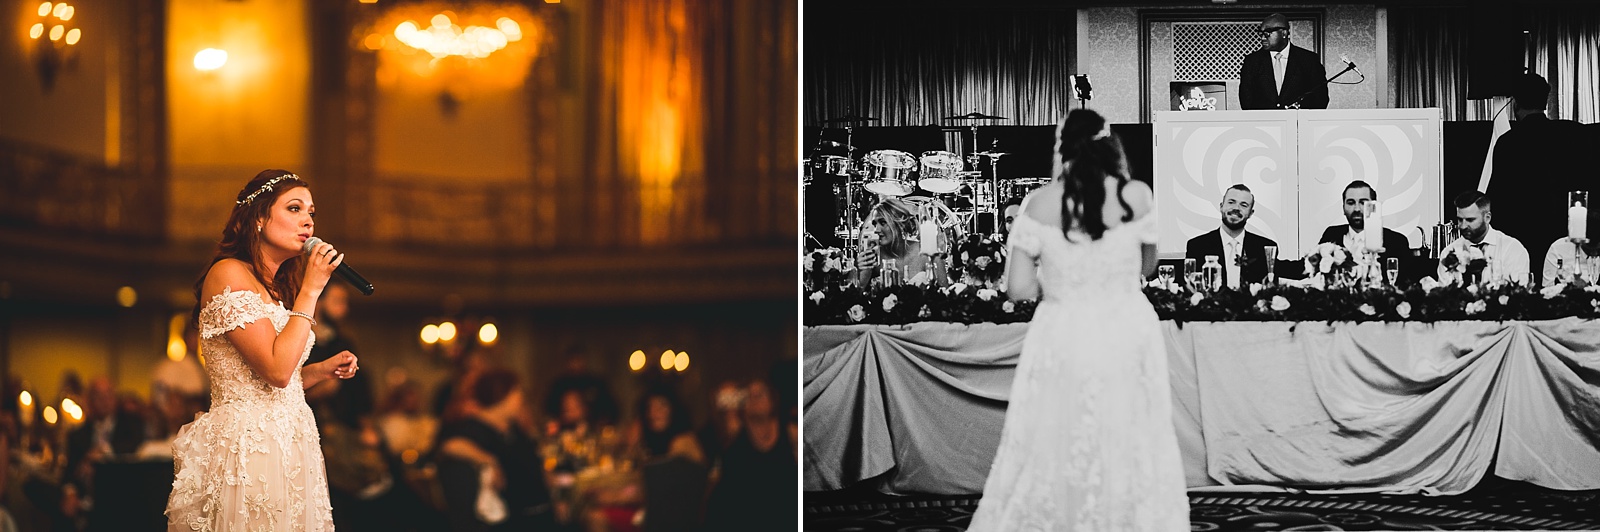 69 bride singing to groom as gift - Hilton Chicago Wedding Photographer // Sarah + Aaron